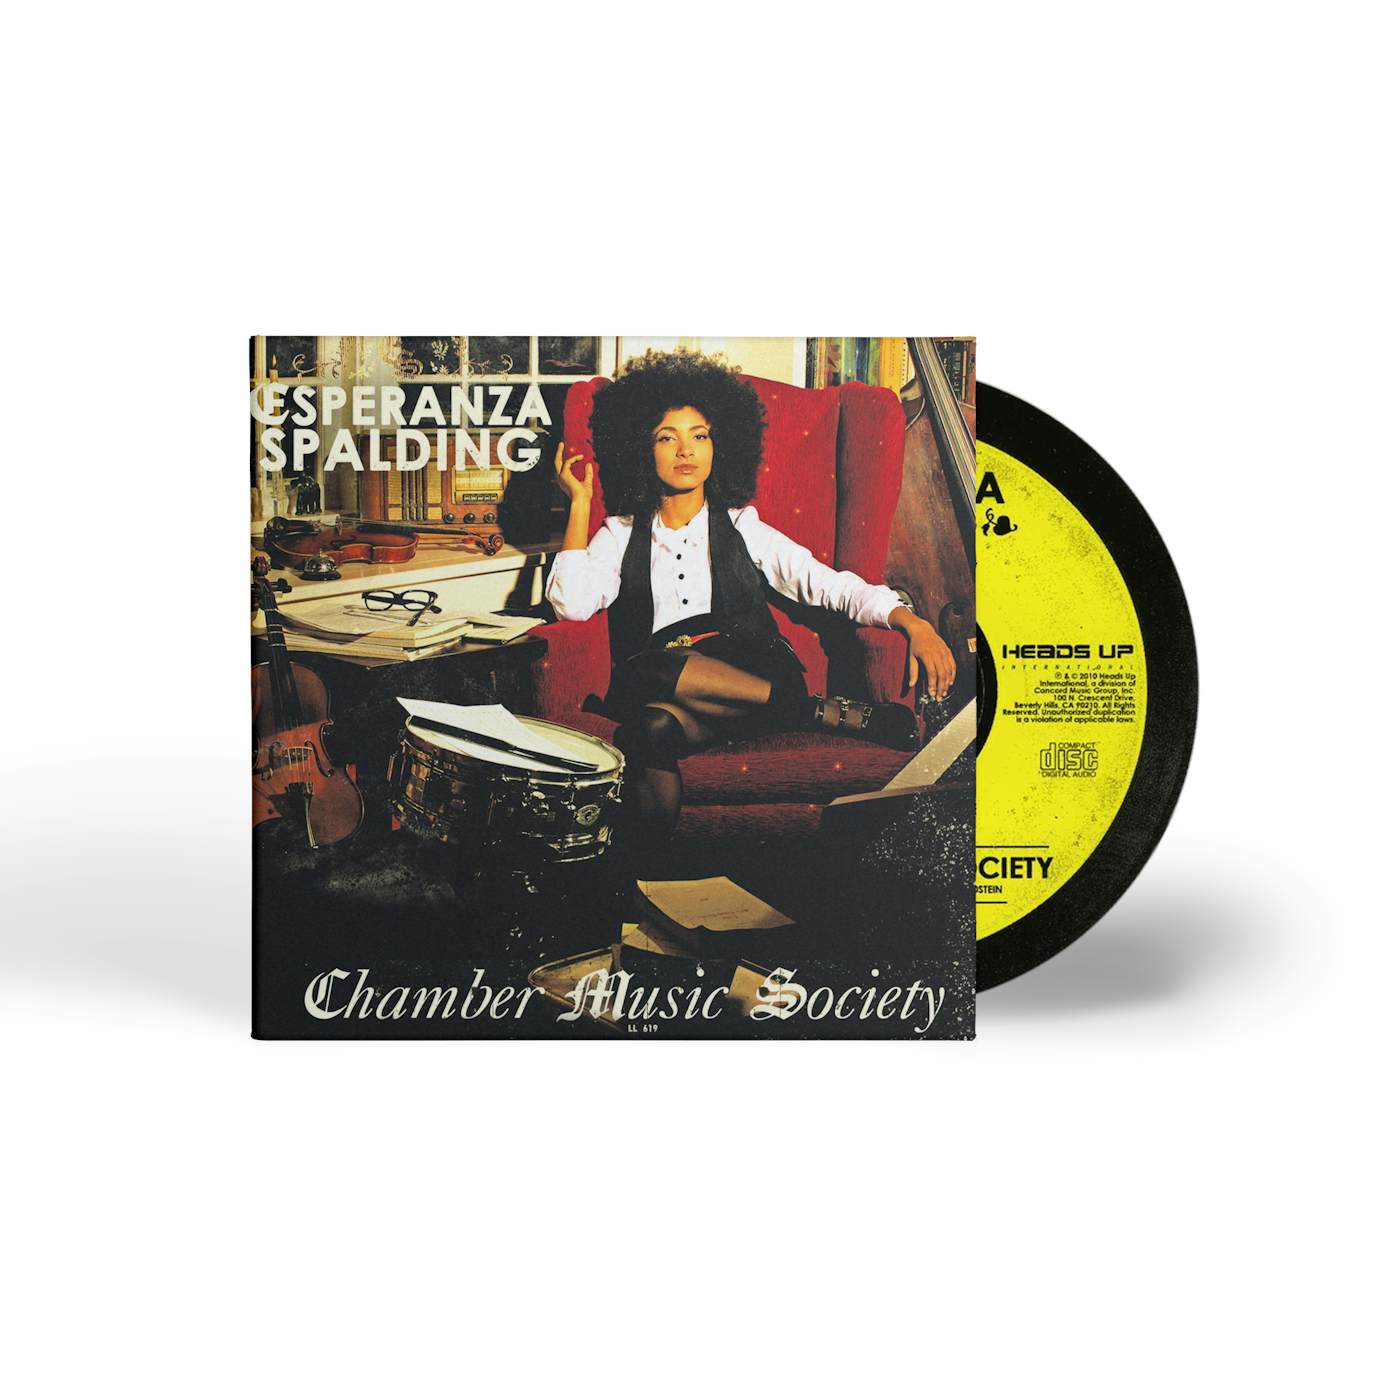 Esperanza Spalding "Chamber Music Society" CD